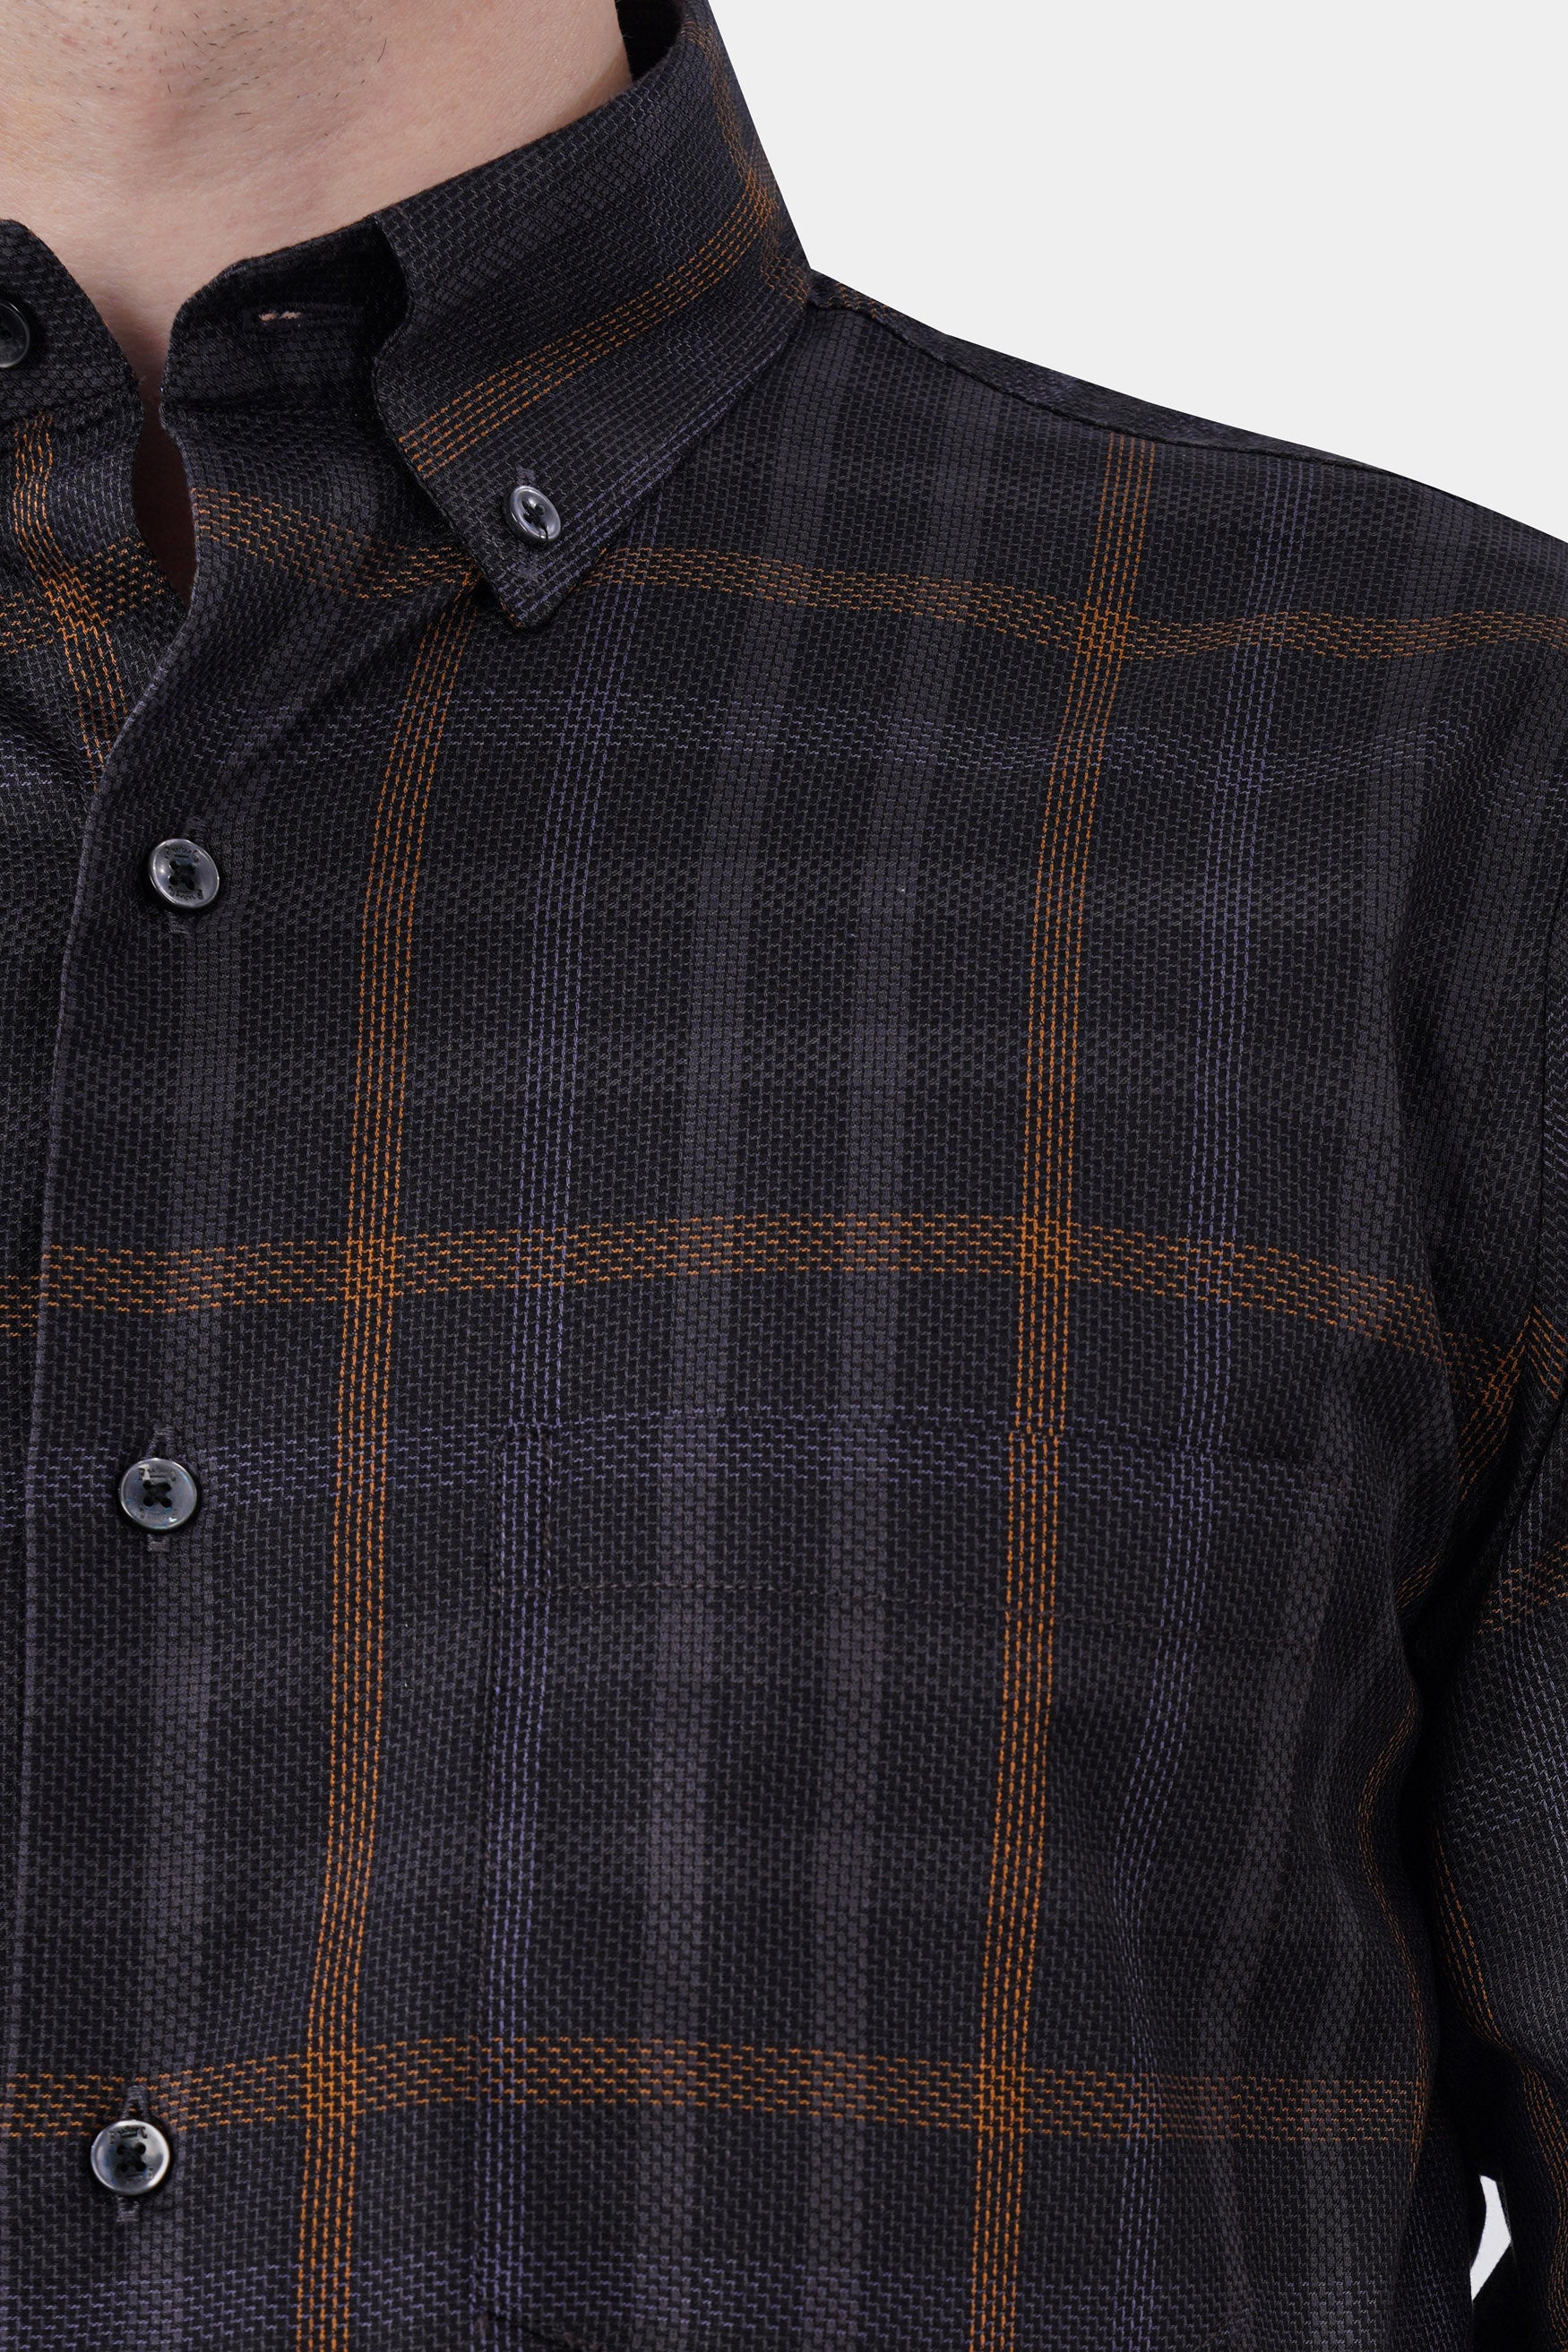 Gondola Black and Mist Gray Checkered Dobby Textured Premium Giza Cotton Shirt